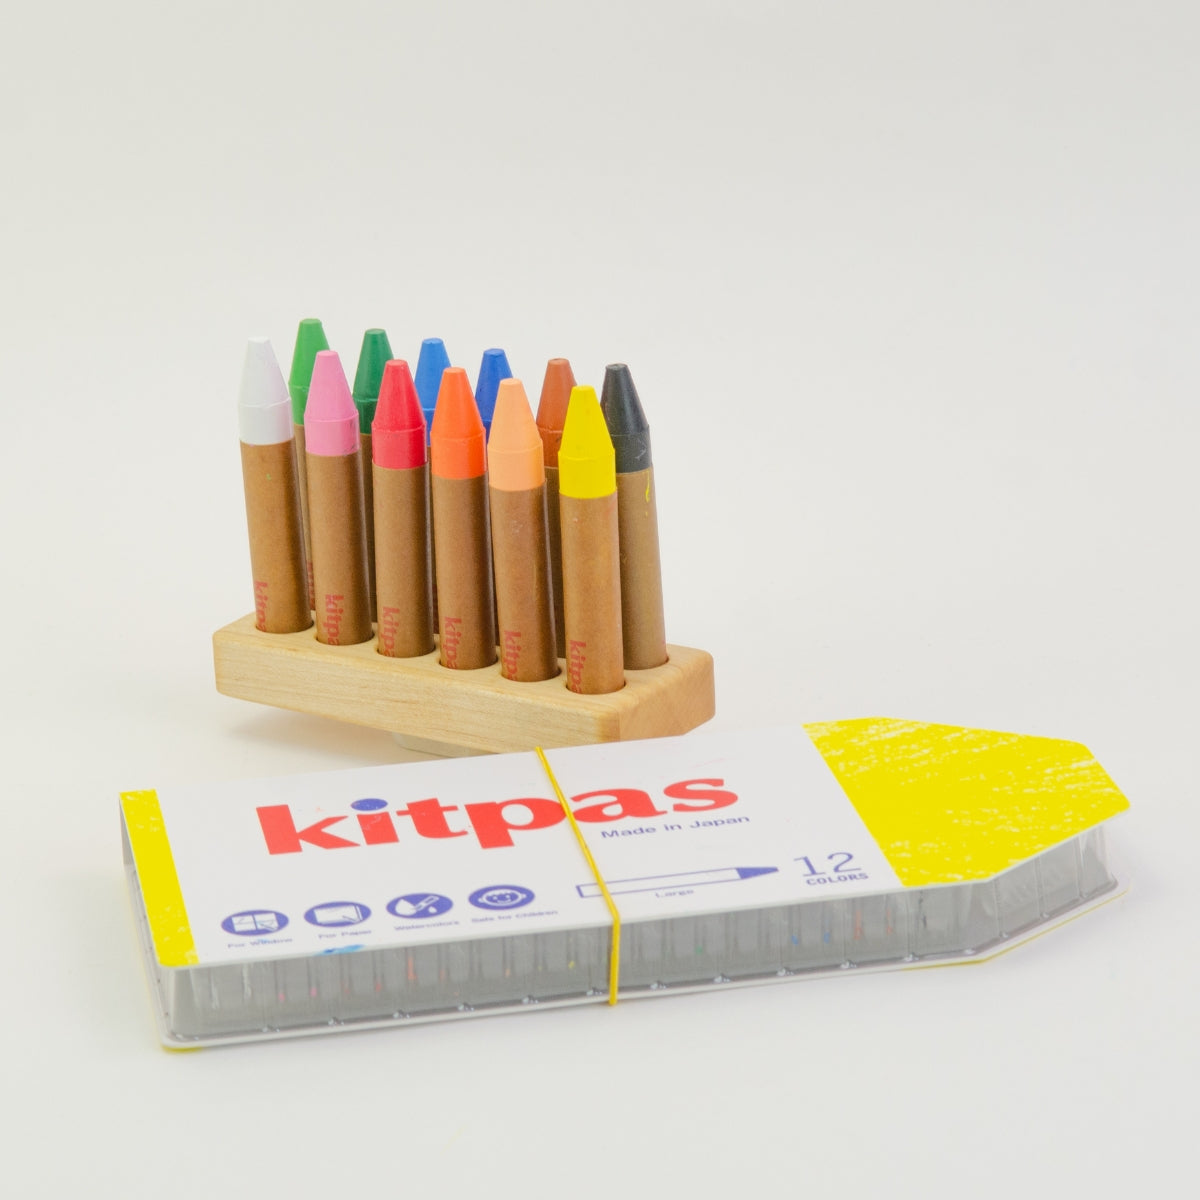 TFJ-7300-BUN From Jennifer Crayon Holder for Kitpas 12 Large Stick Crayons